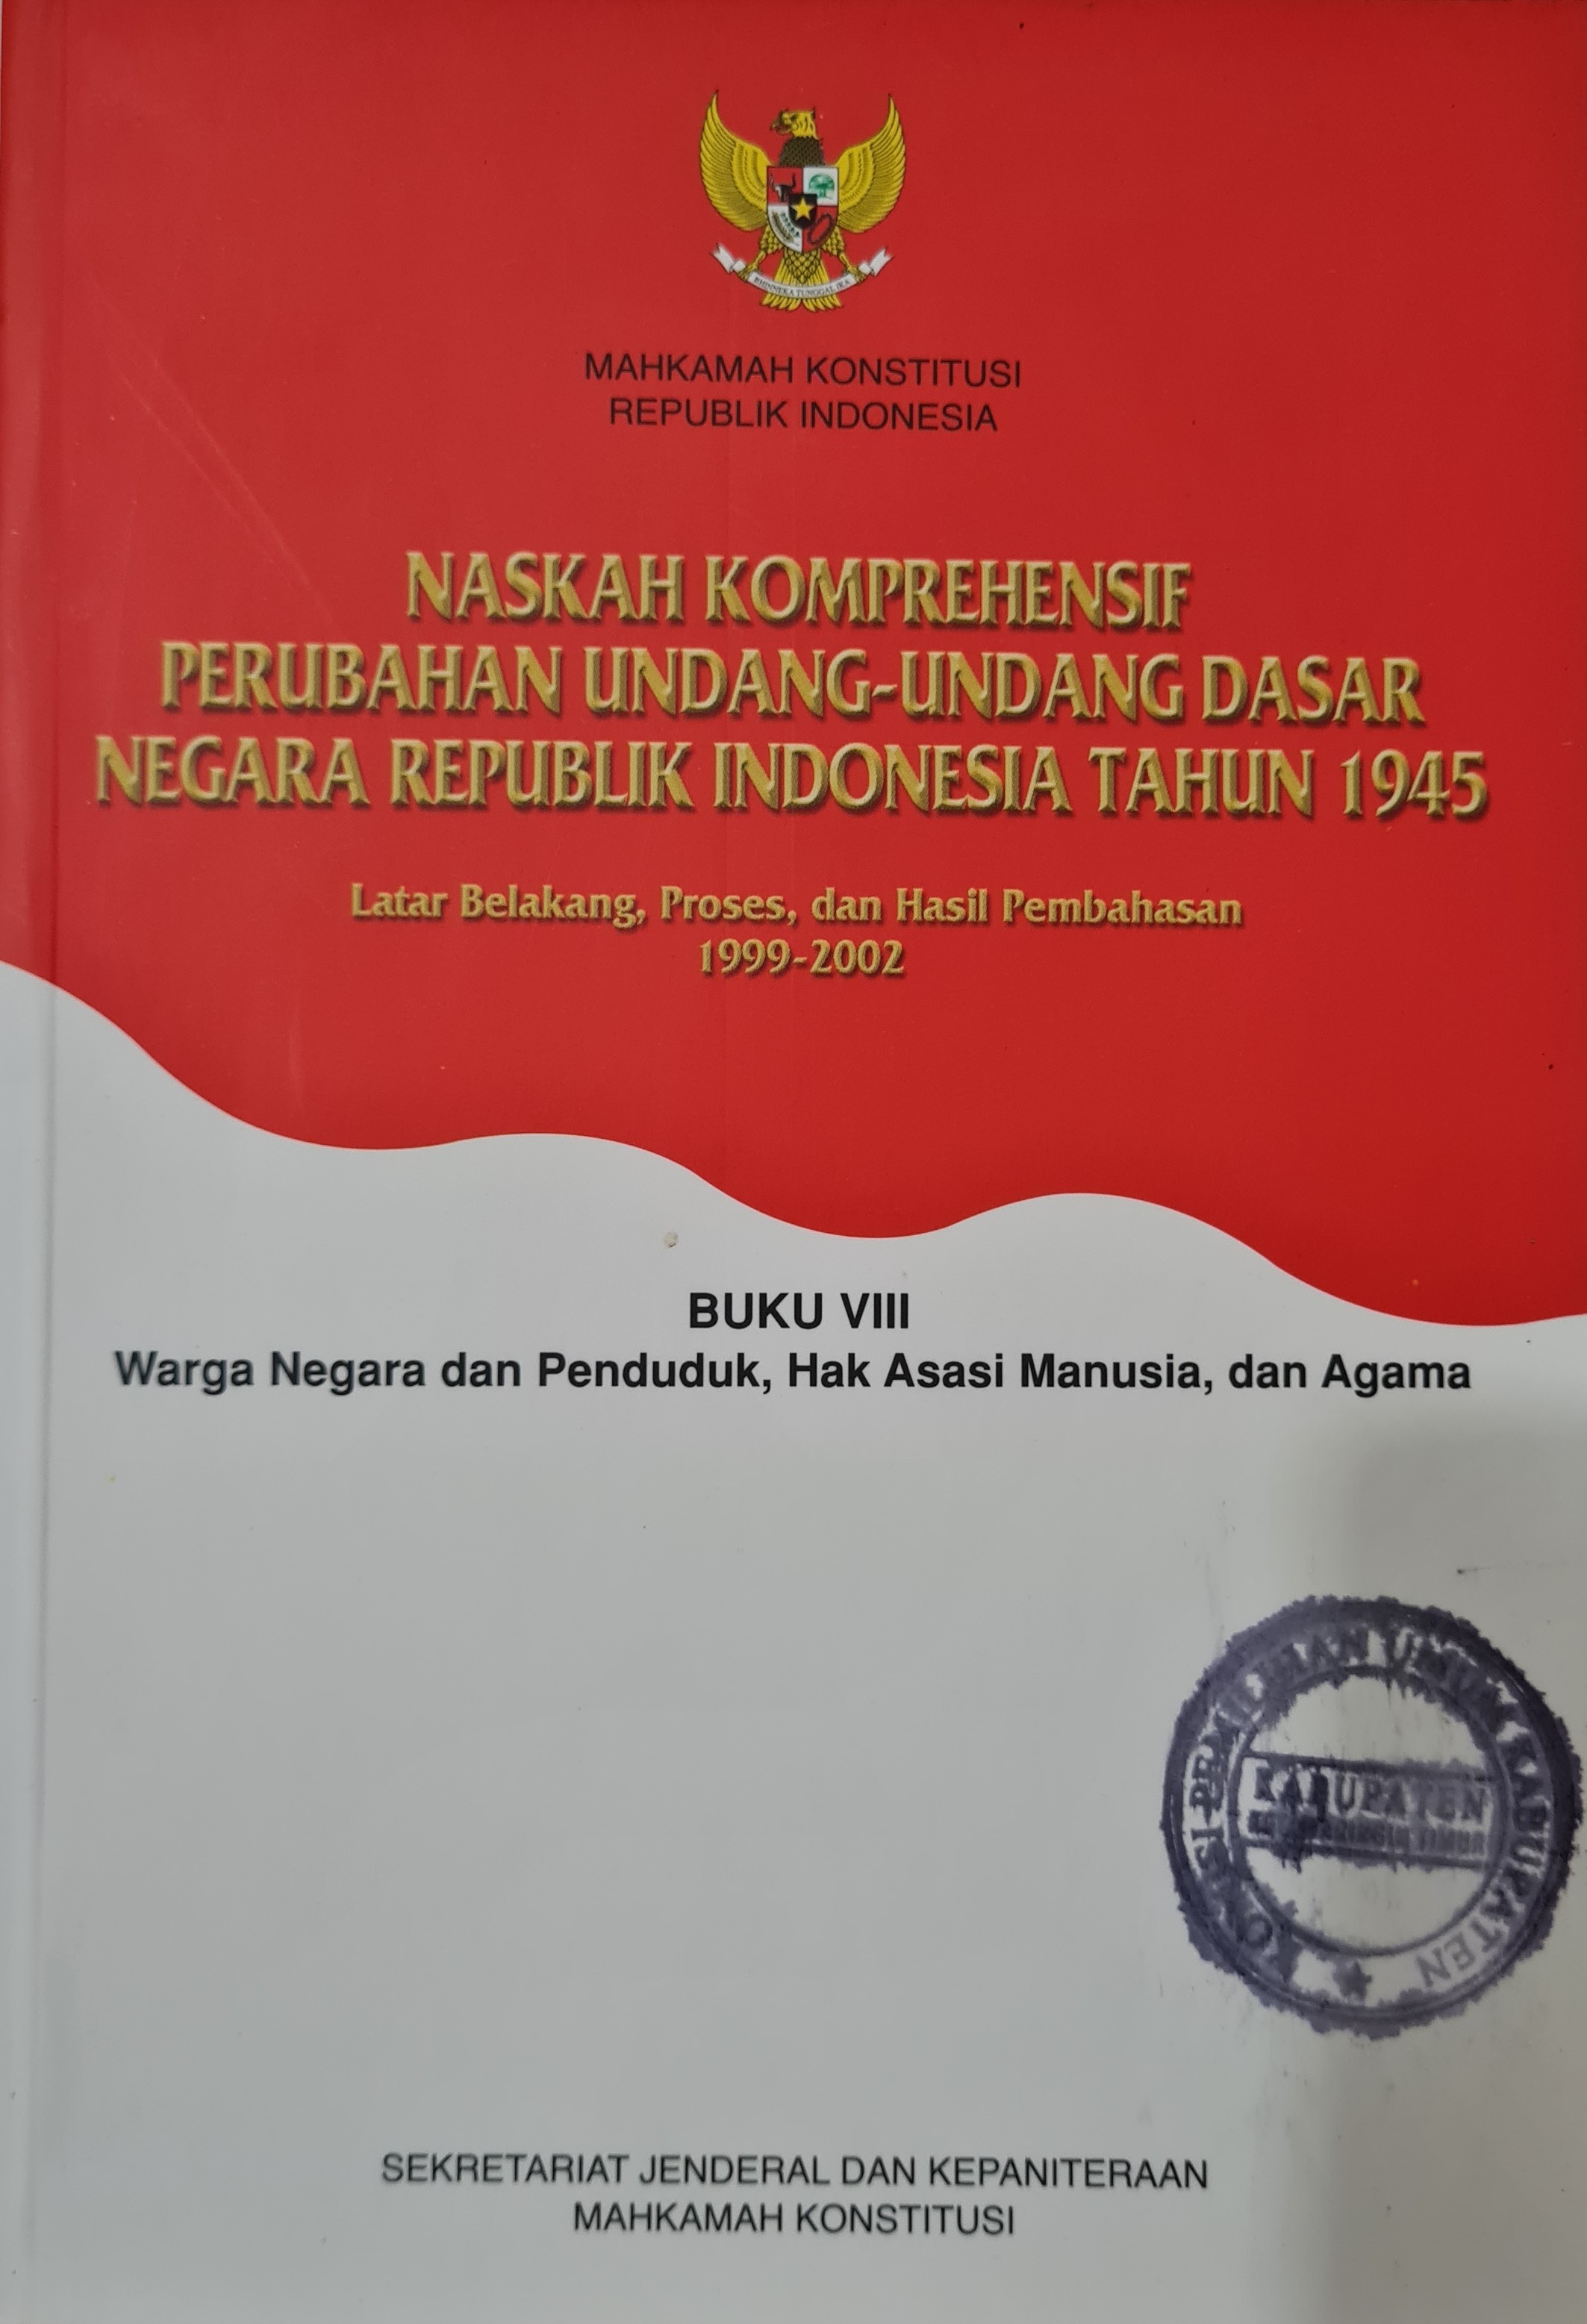 Naskah Komprehensif Perubahan Undang-Undang Dasar Negara Republik Indonesia Tahun 1945 Buku VIII Warga Negara dan Penduduk, Hak Asasi Manusia, dan Agama